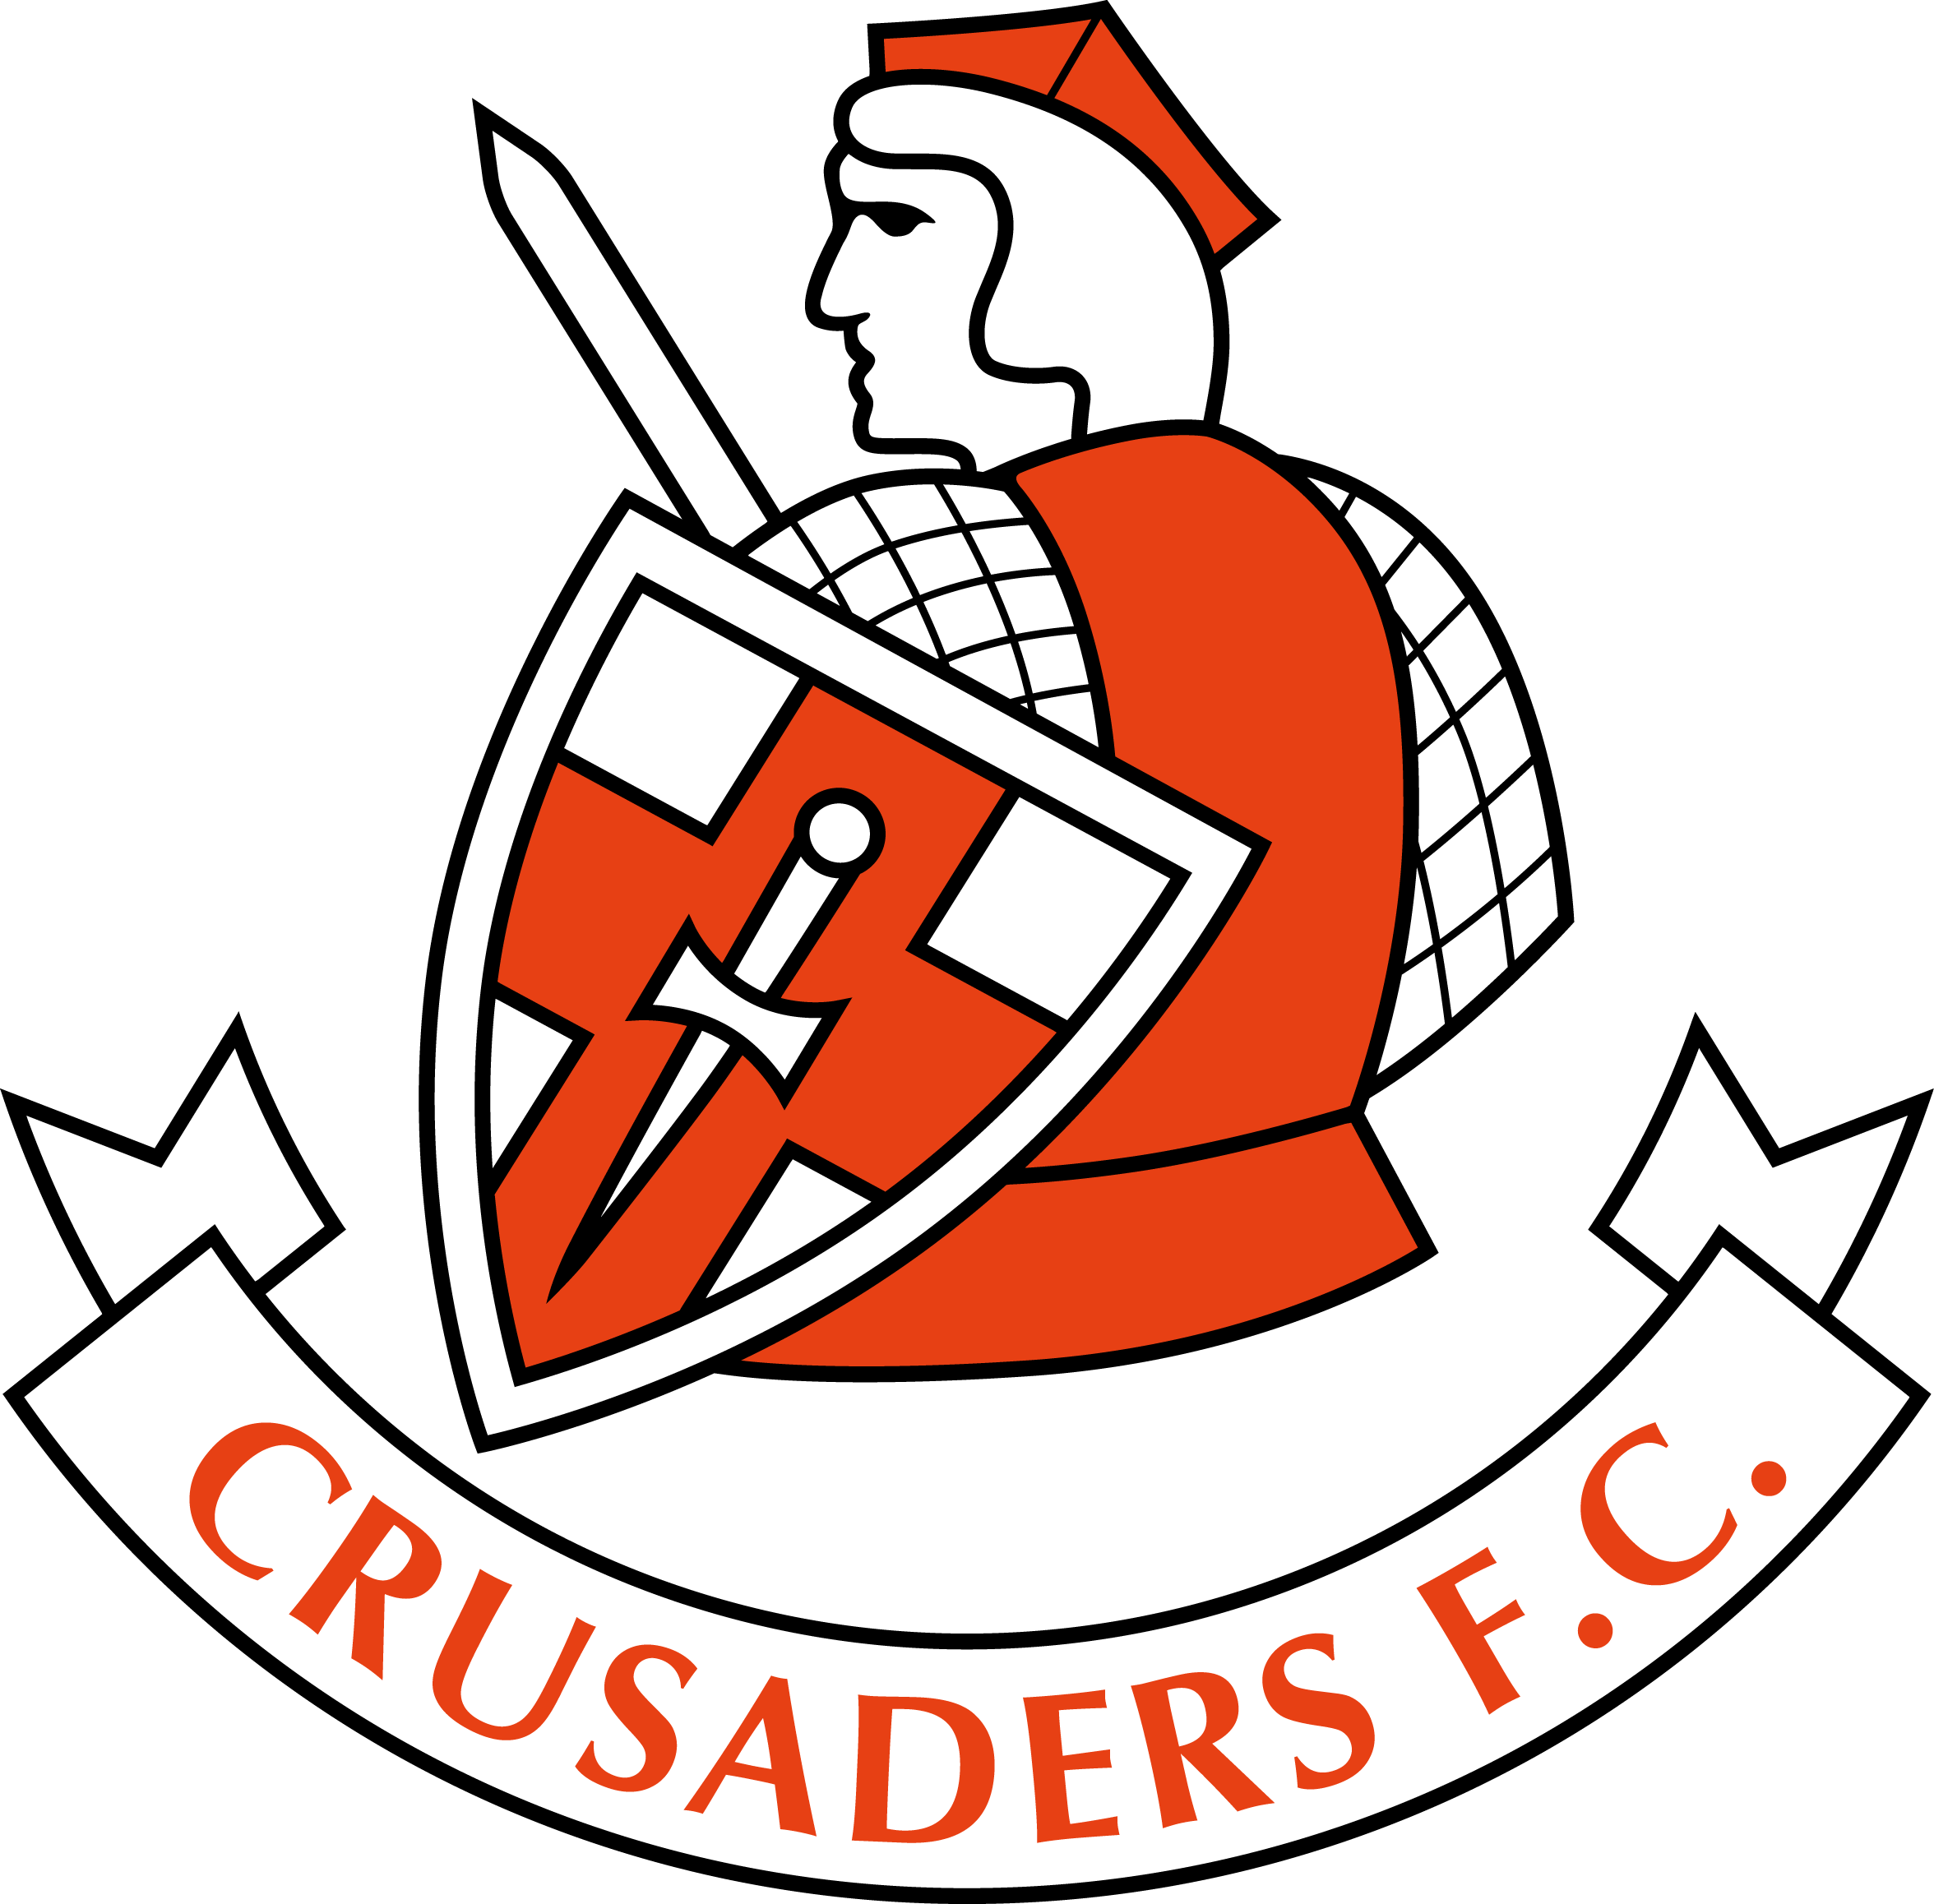 Crusaders Soccer Logo - Lion & bat shield kingdom baseball banner black and white library